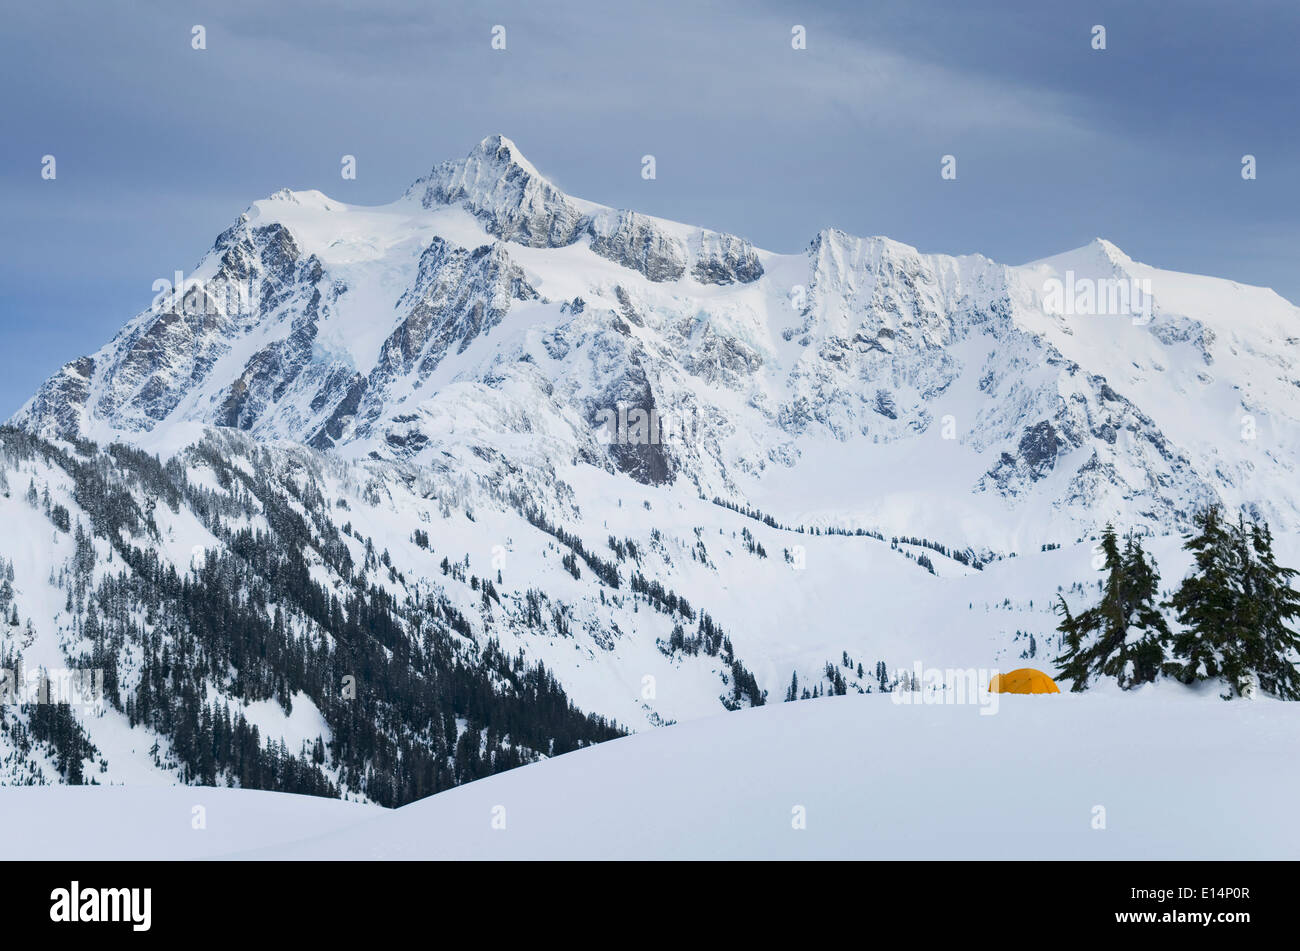 Rocky mountain overlooking snowy landscape Stock Photo